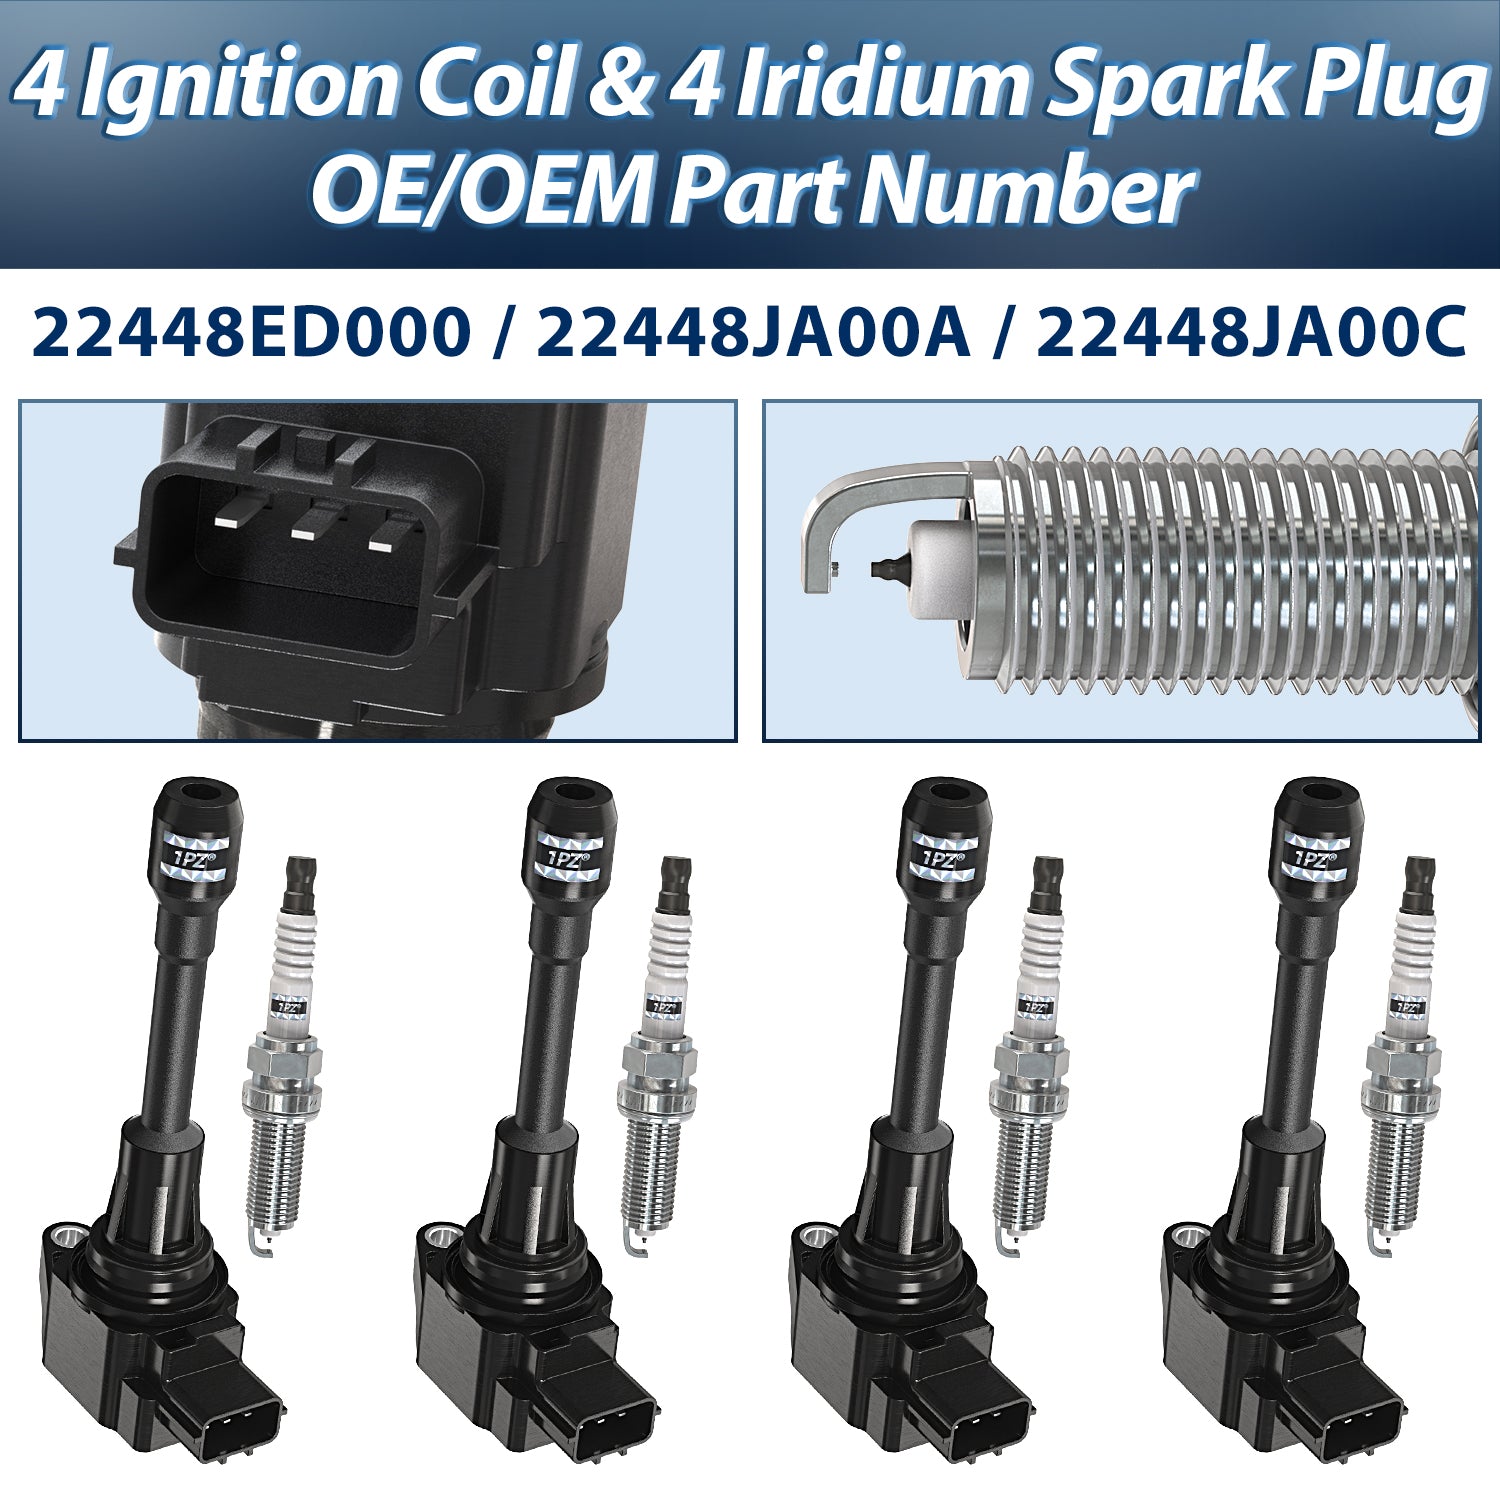 1PZ Ignition Coil Pack and Iridium Spark Plug UF549 9029 Compatible With 2007-2019 Nissan Altima Cube Rogue Sentra Versa NV200 1.6L 1.8L 2.0L 2.5L L4 Set of 4